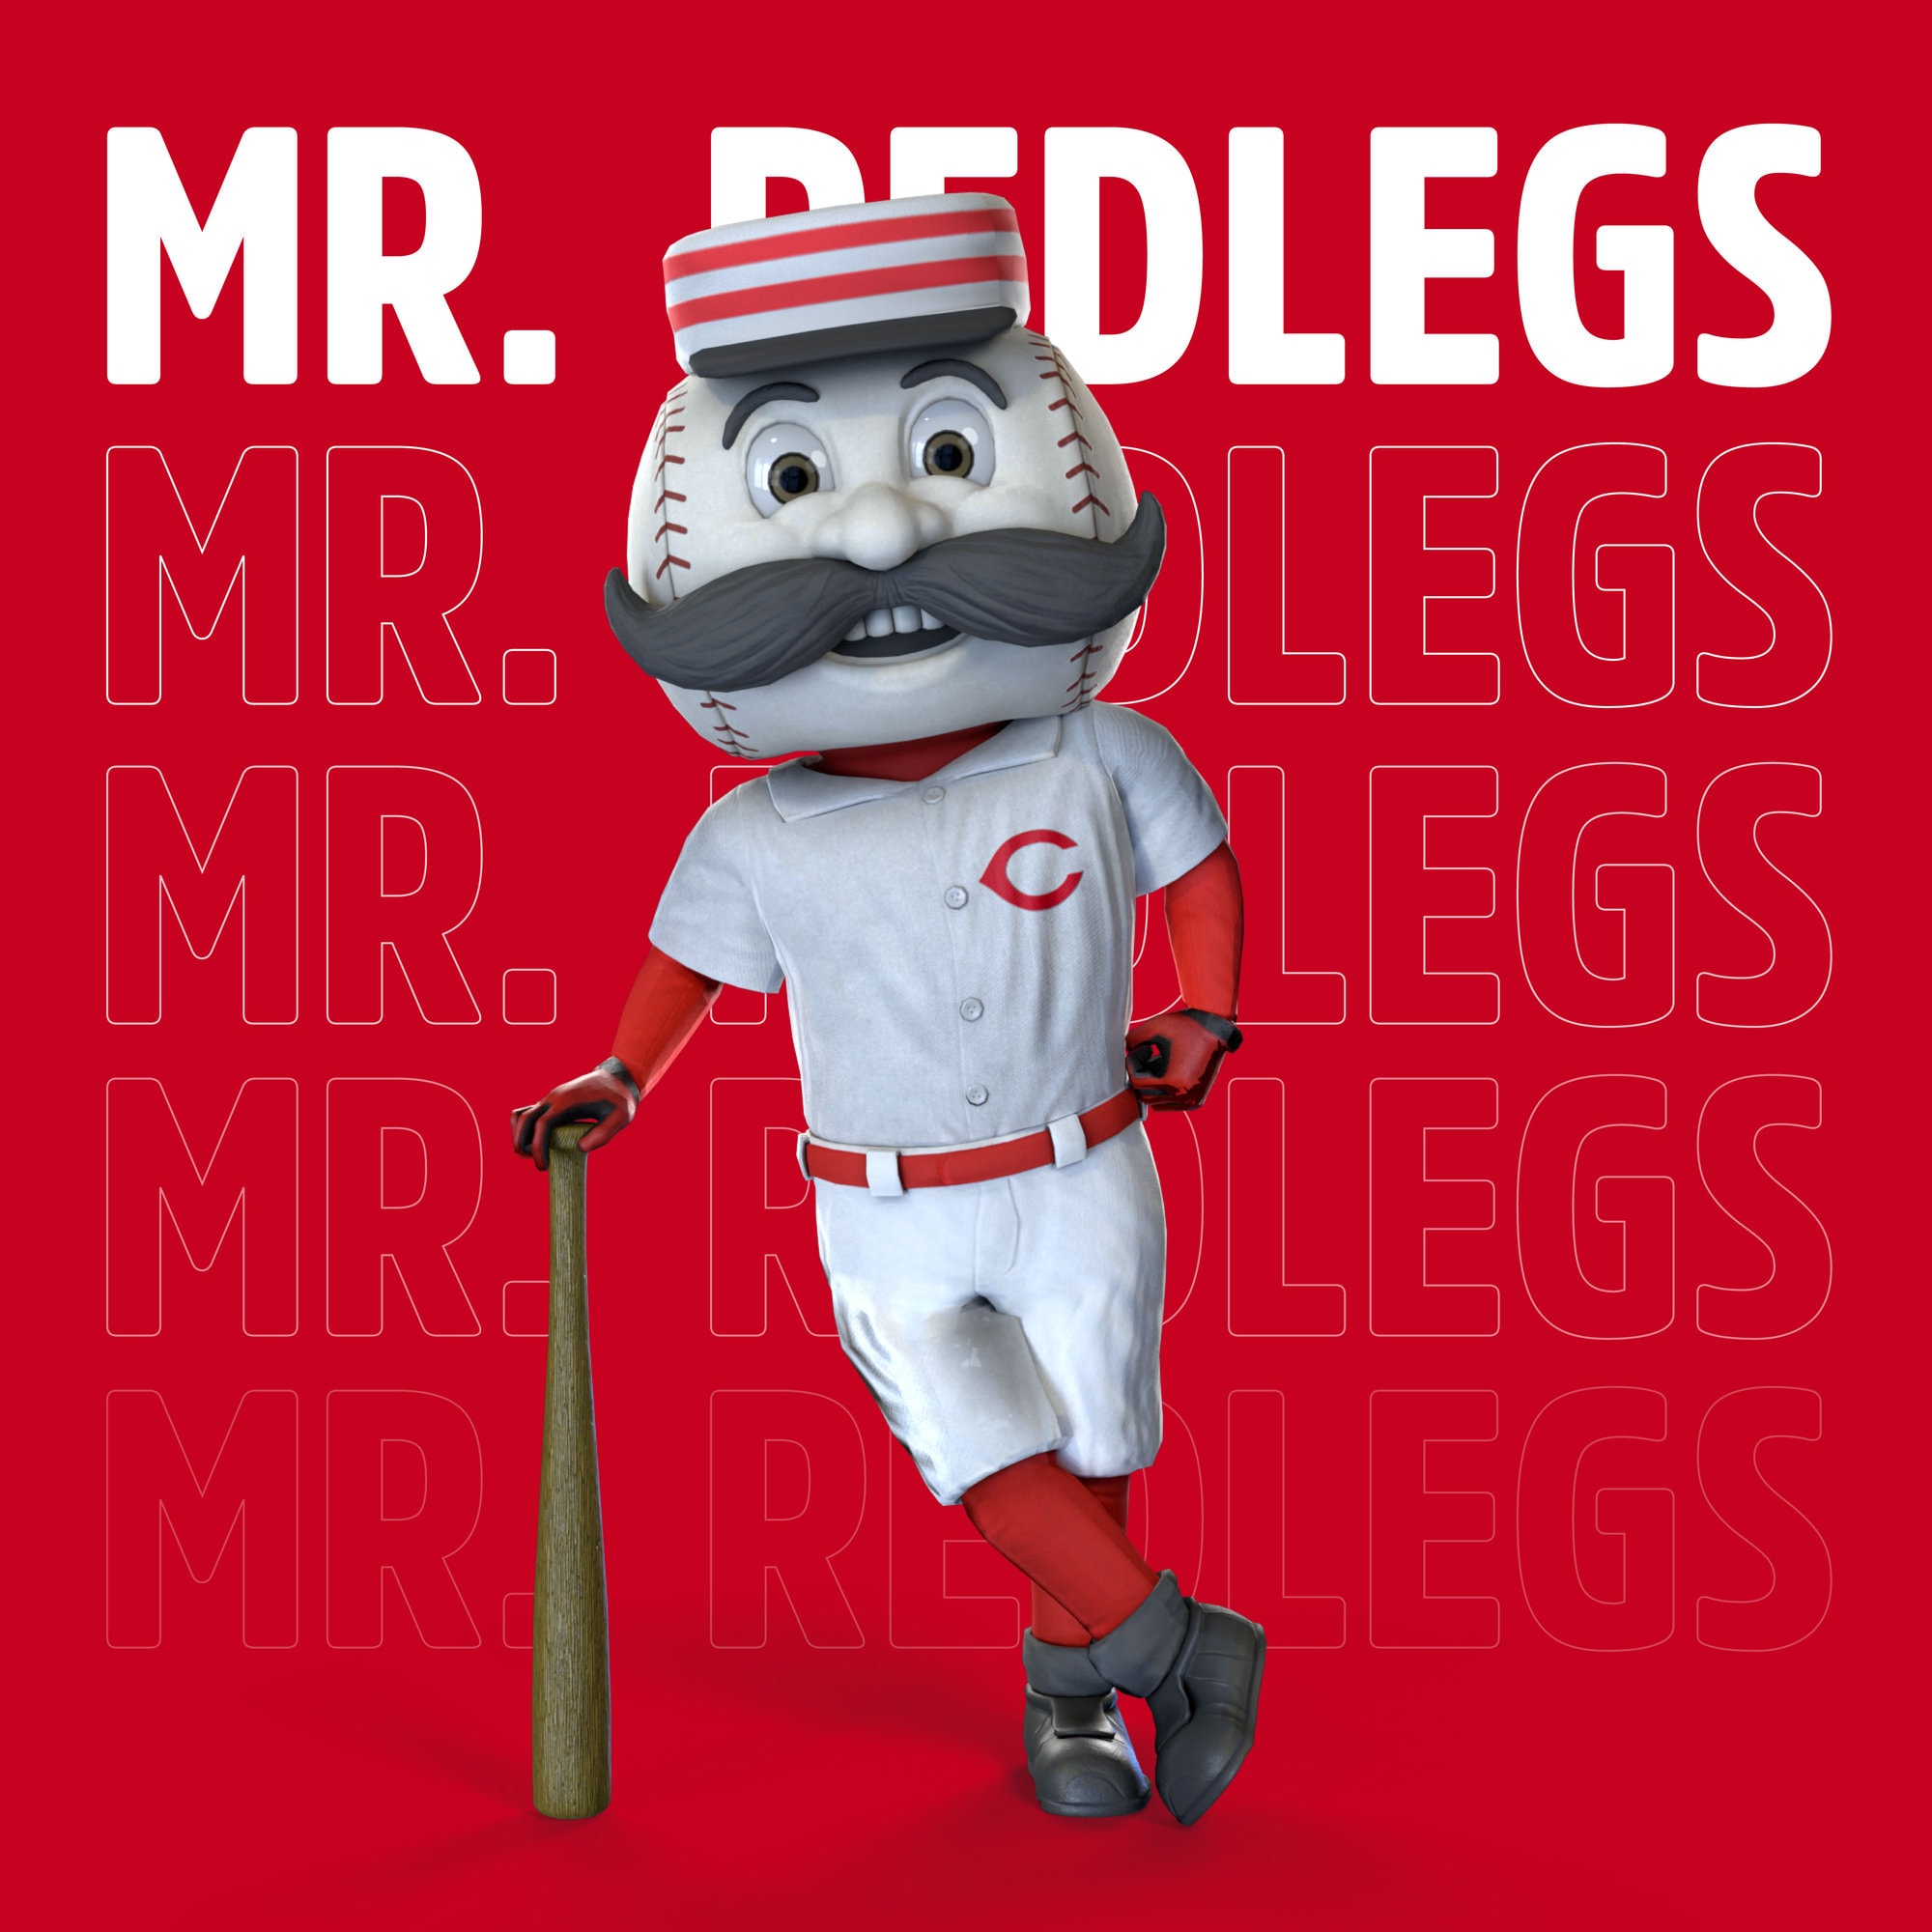 Mr. Redlegs  Cincinnati reds baseball, Cincinnati reds, Reds baseball